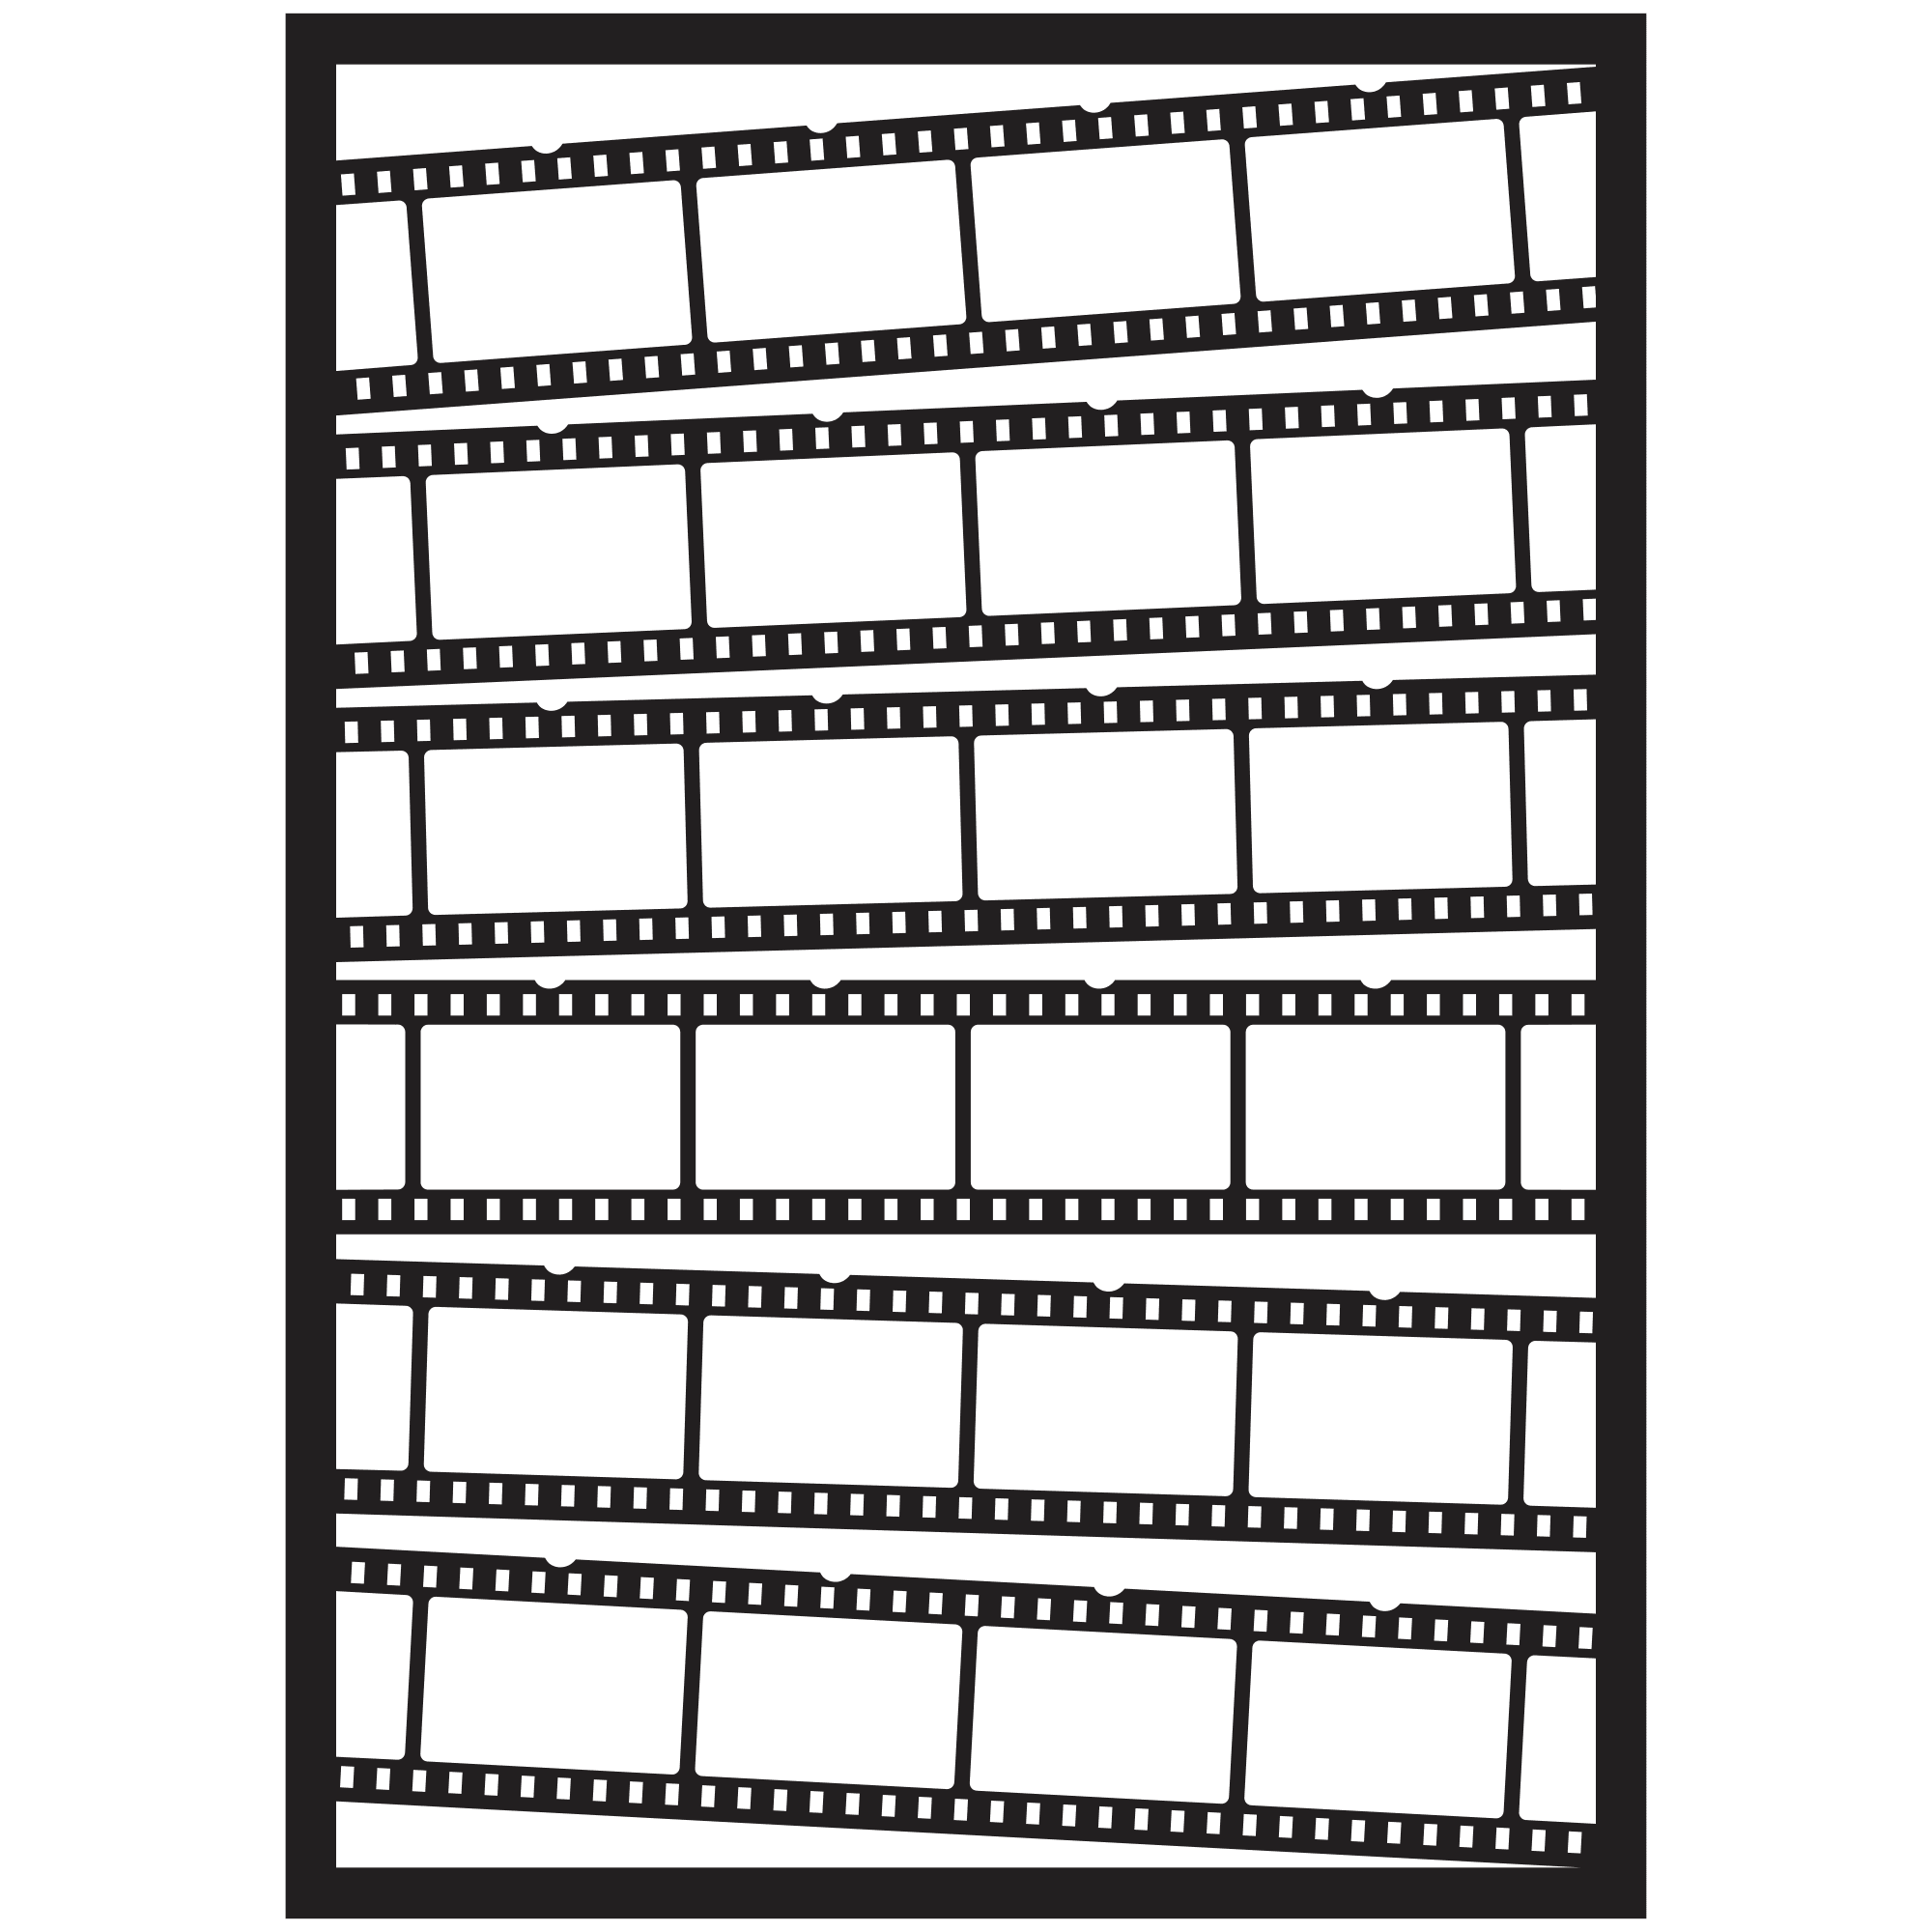 Film Strips Card Base / Background / Stencil by Clikchic Designs